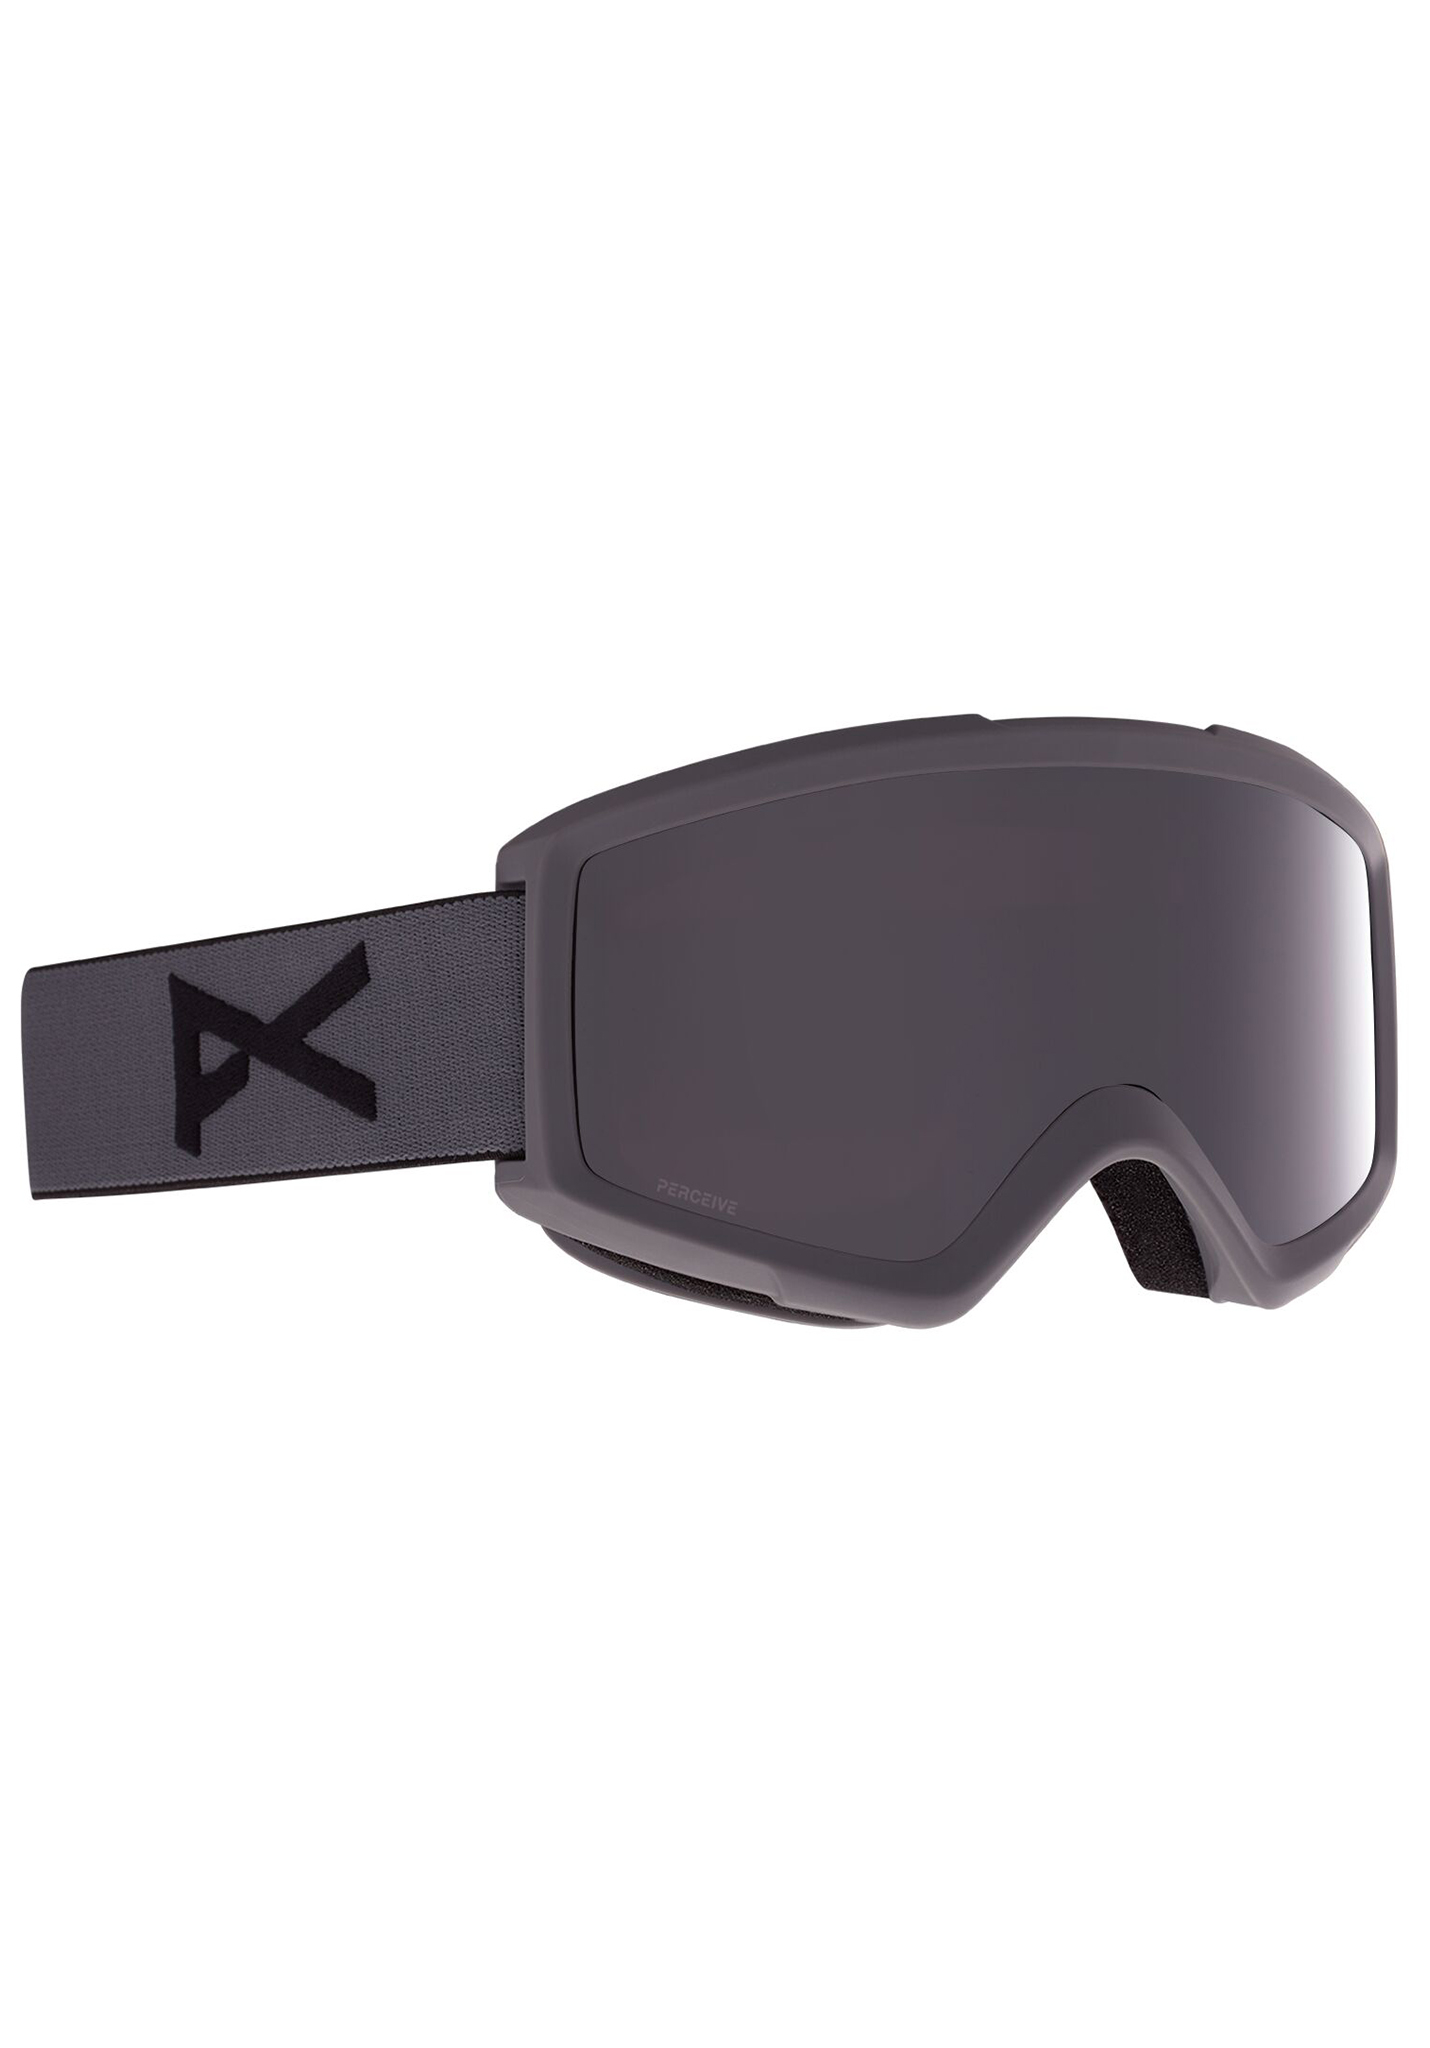 Anon Helix 2.0 Snowboardbrillen stelth/prcv sun onyx One Size